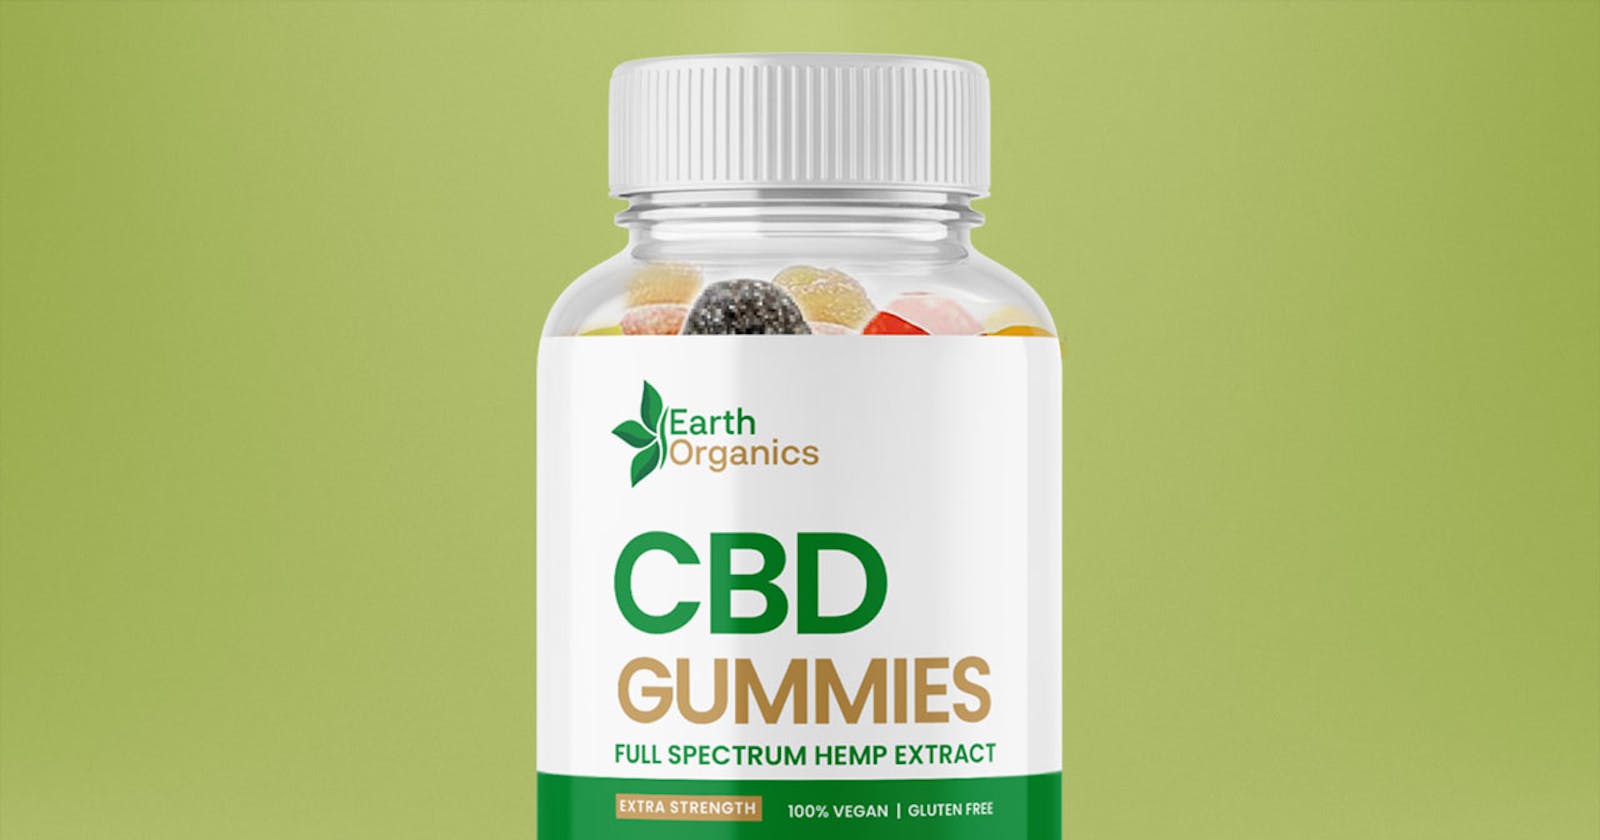 Delicious and Effective: Earth Organics CBD Gummies for Optimal Wellness